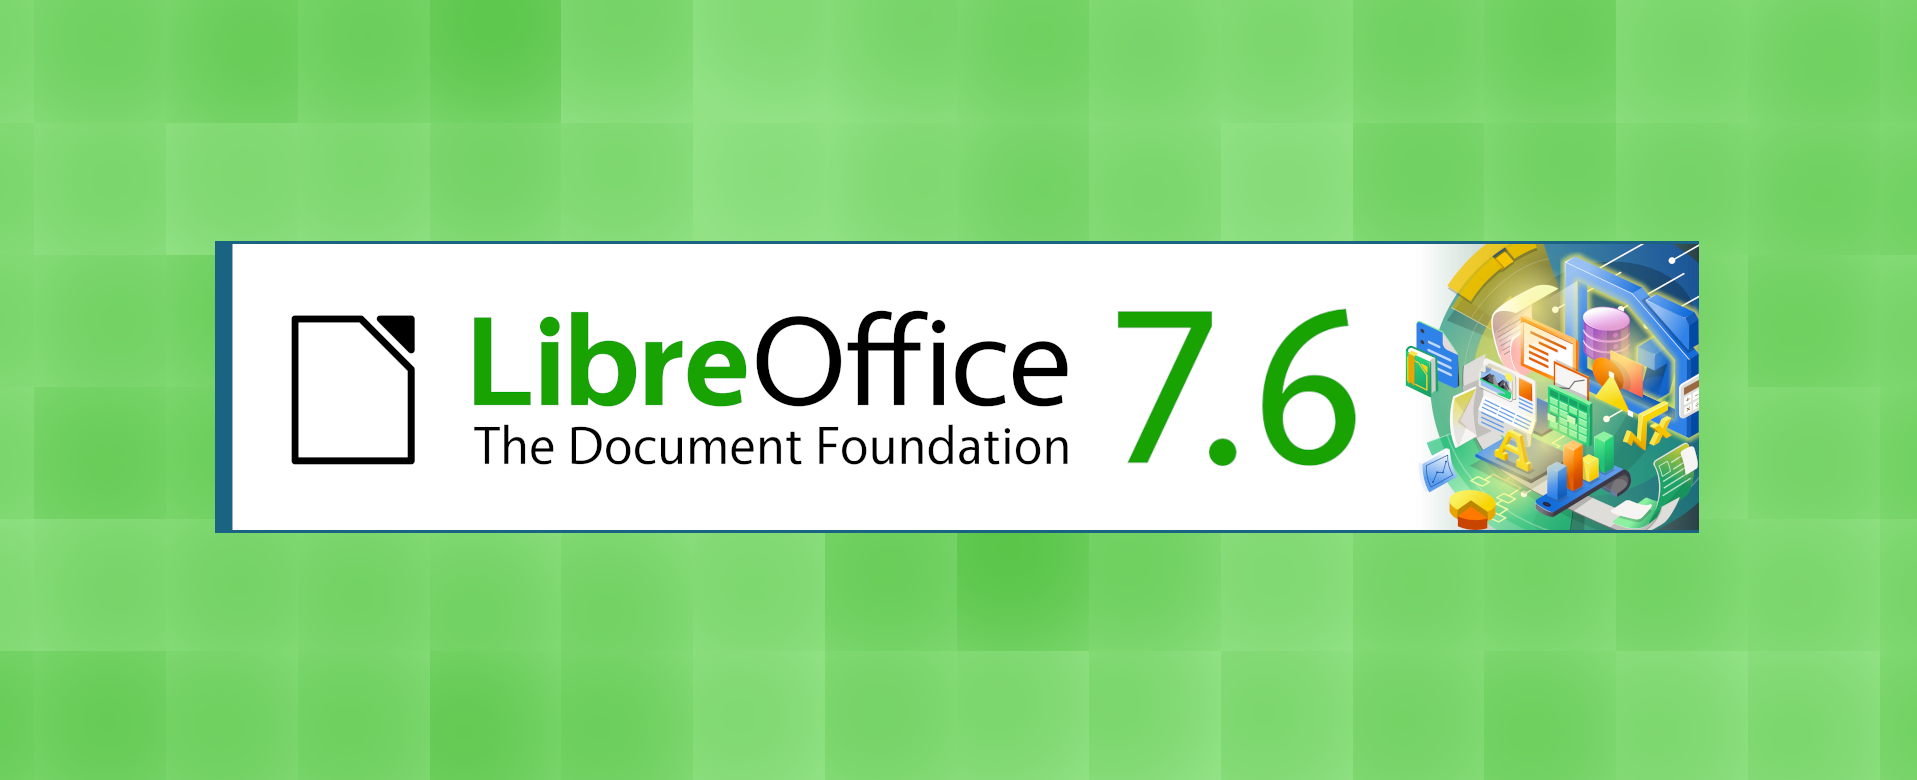 LibreOffice 7.6 green banner